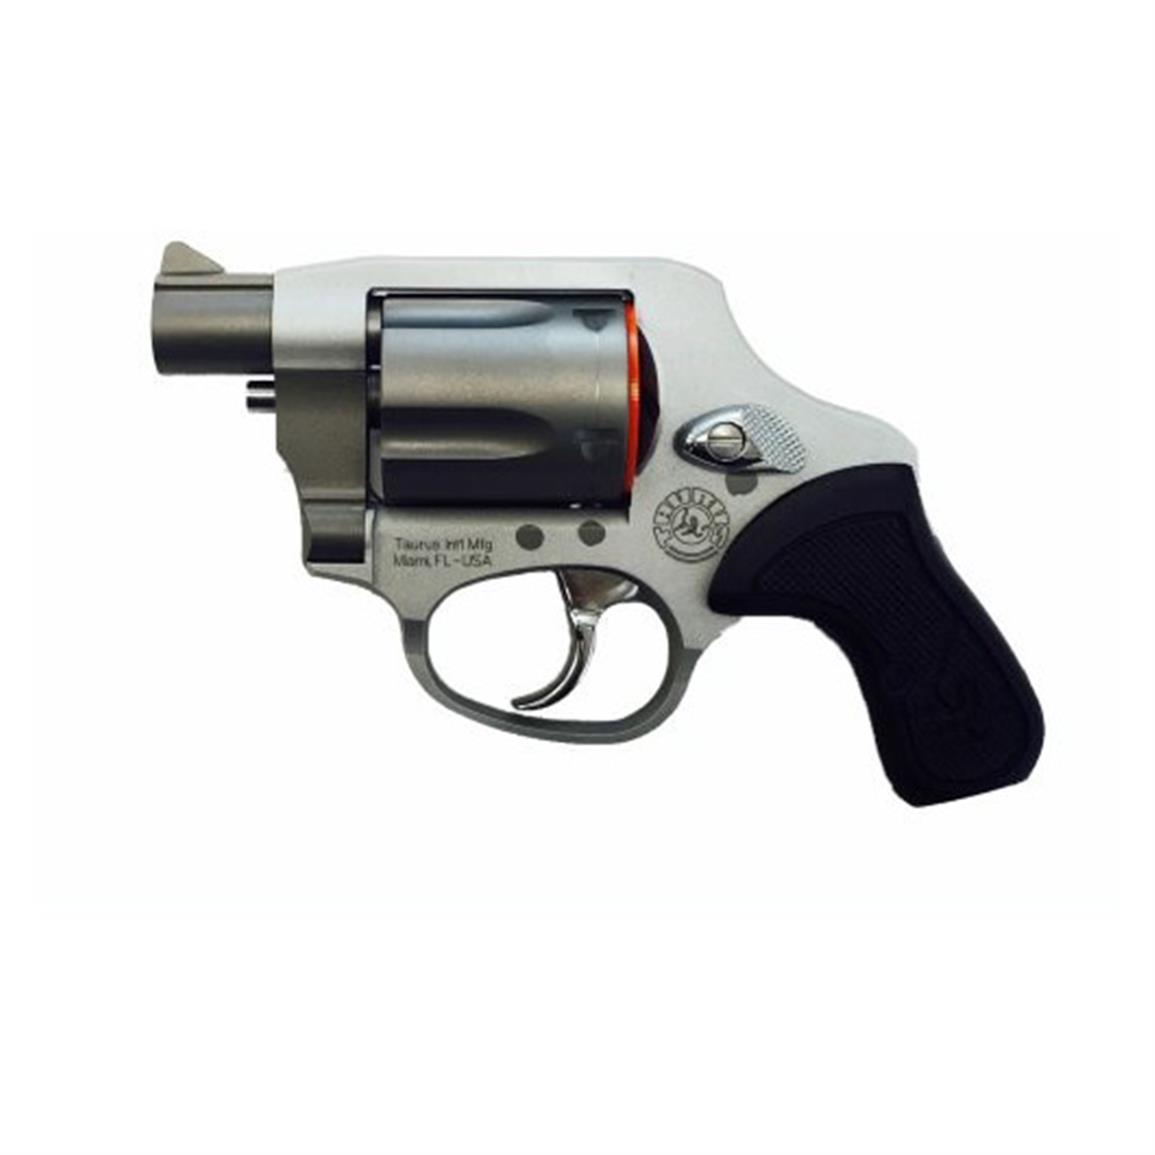 Taurus 85 No View Snubnose Revolver 38 Special 2850019nv 